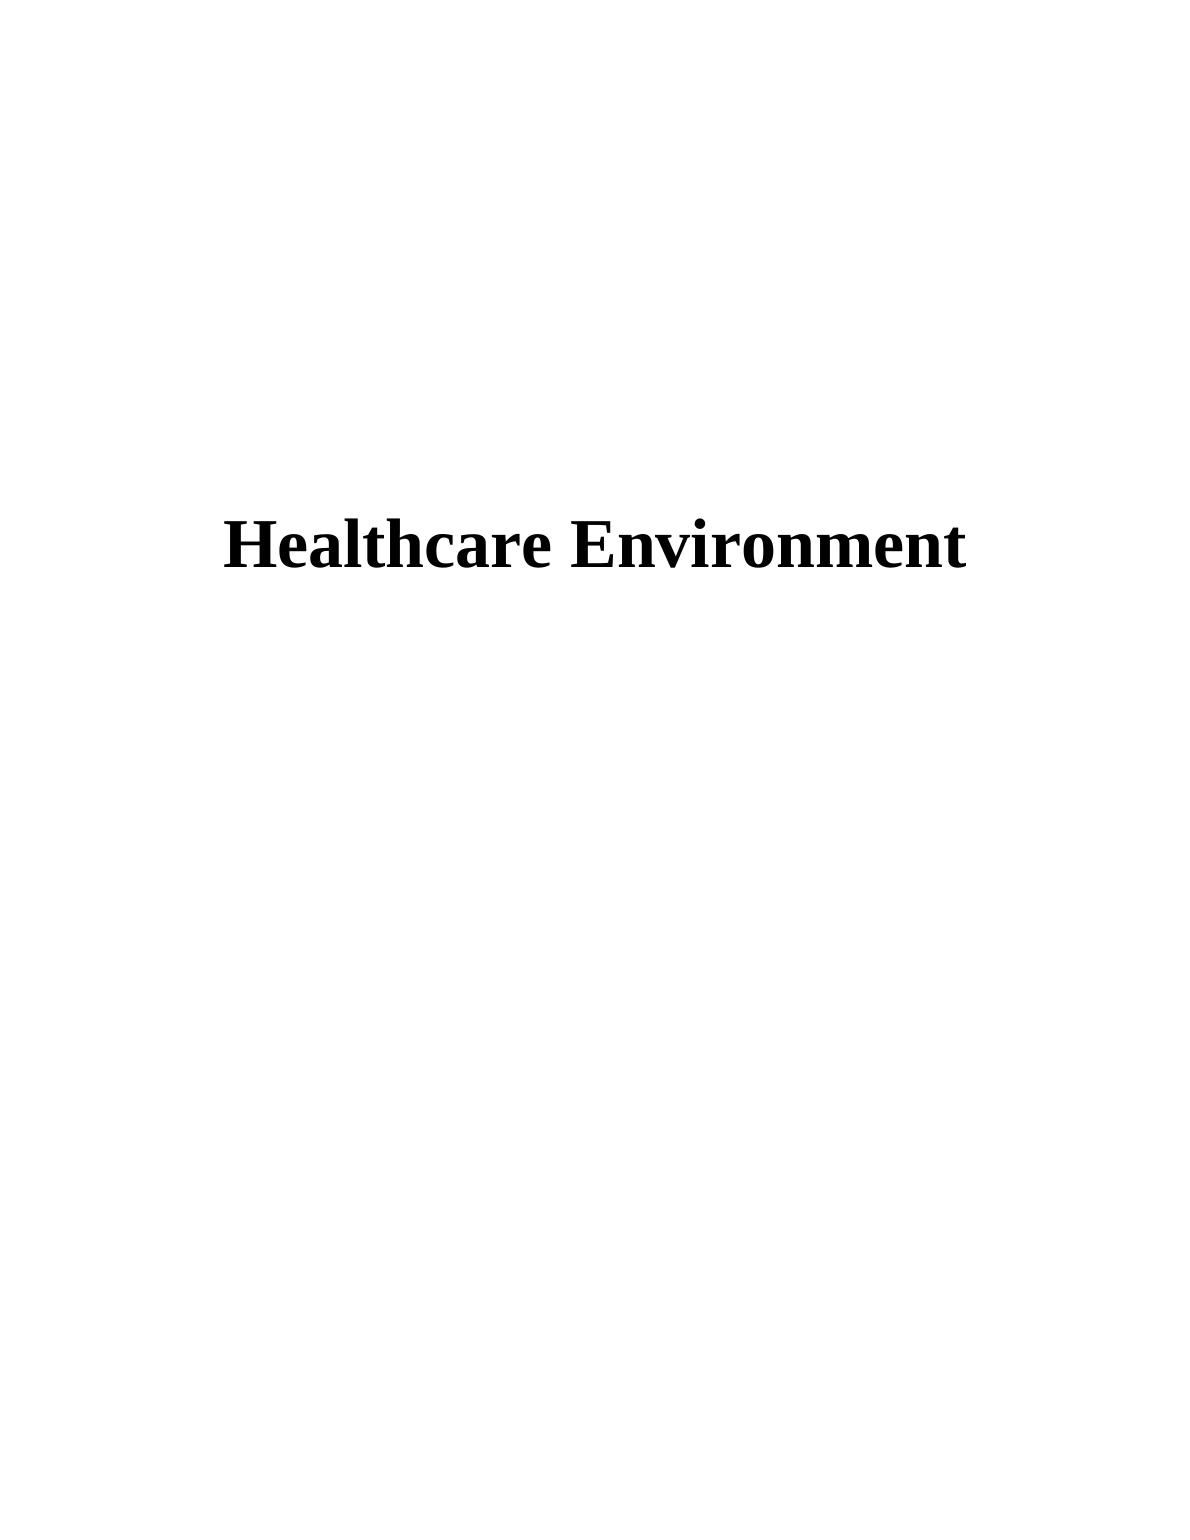 Healthcare Environment Report_1